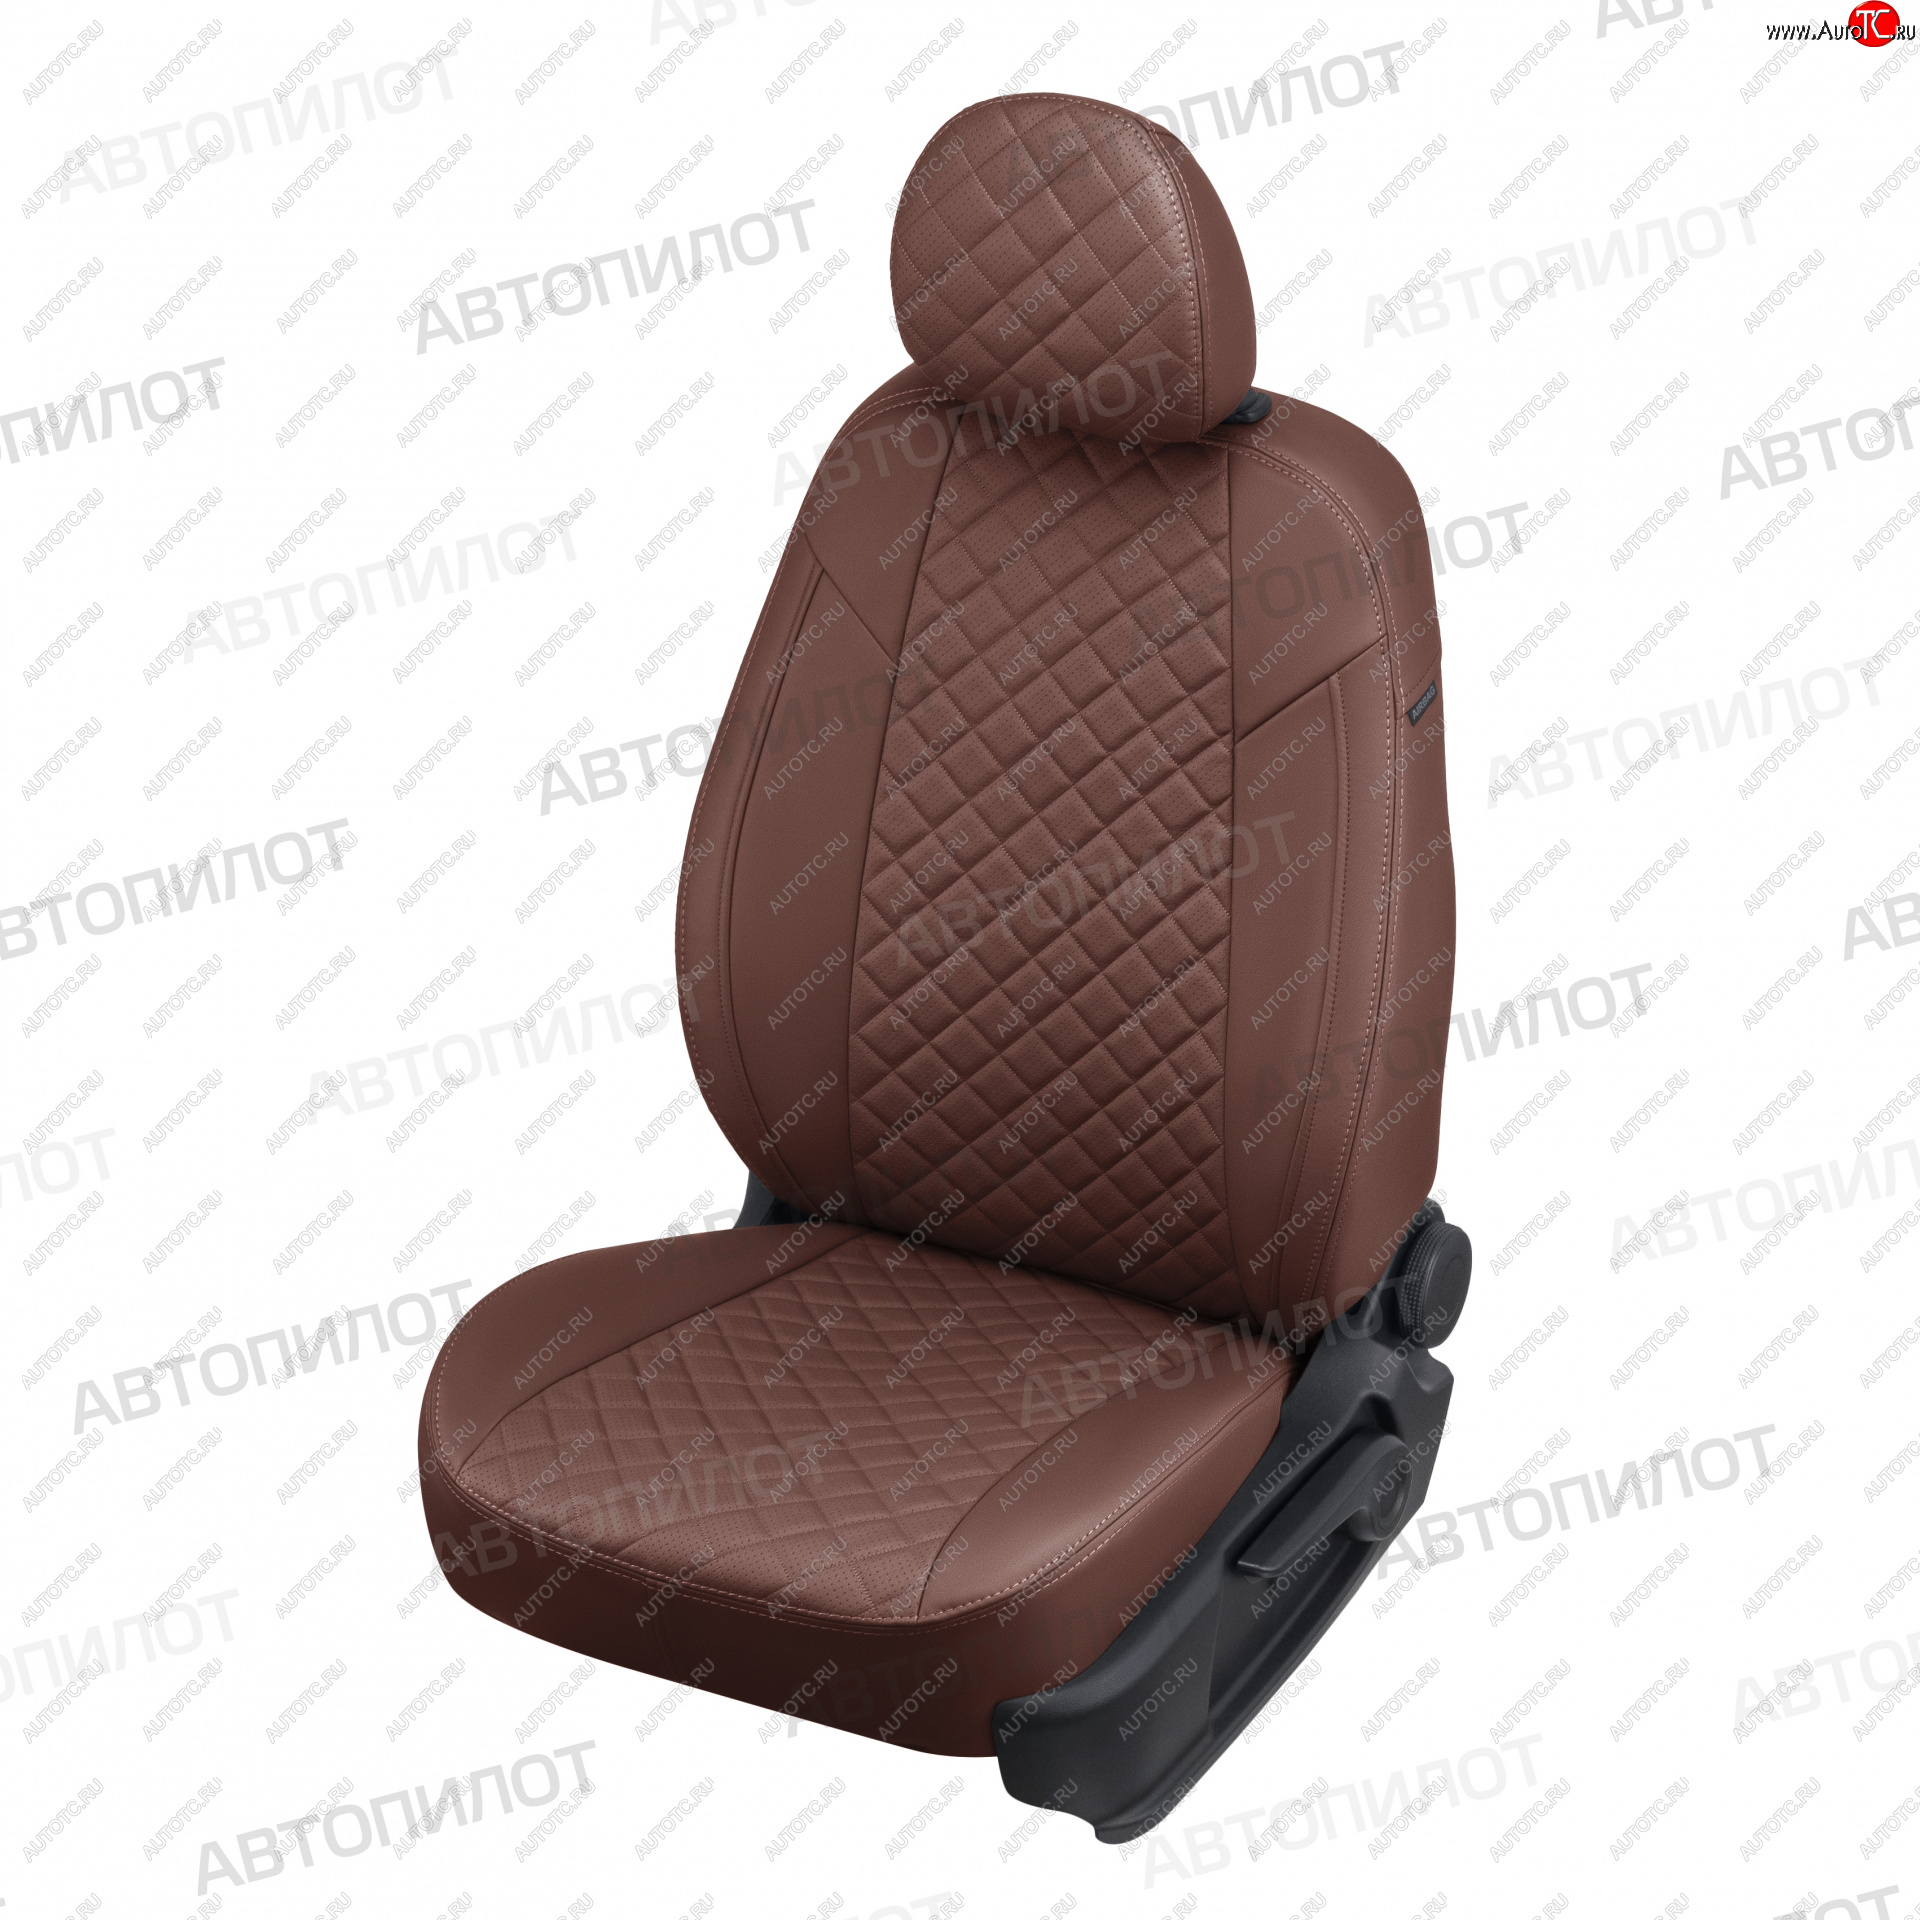 7 799 р. Чехлы сидений (экокожа) Автопилот Ромб  KIA Soul  2 PS (2014-2019) (темно-коричневый)